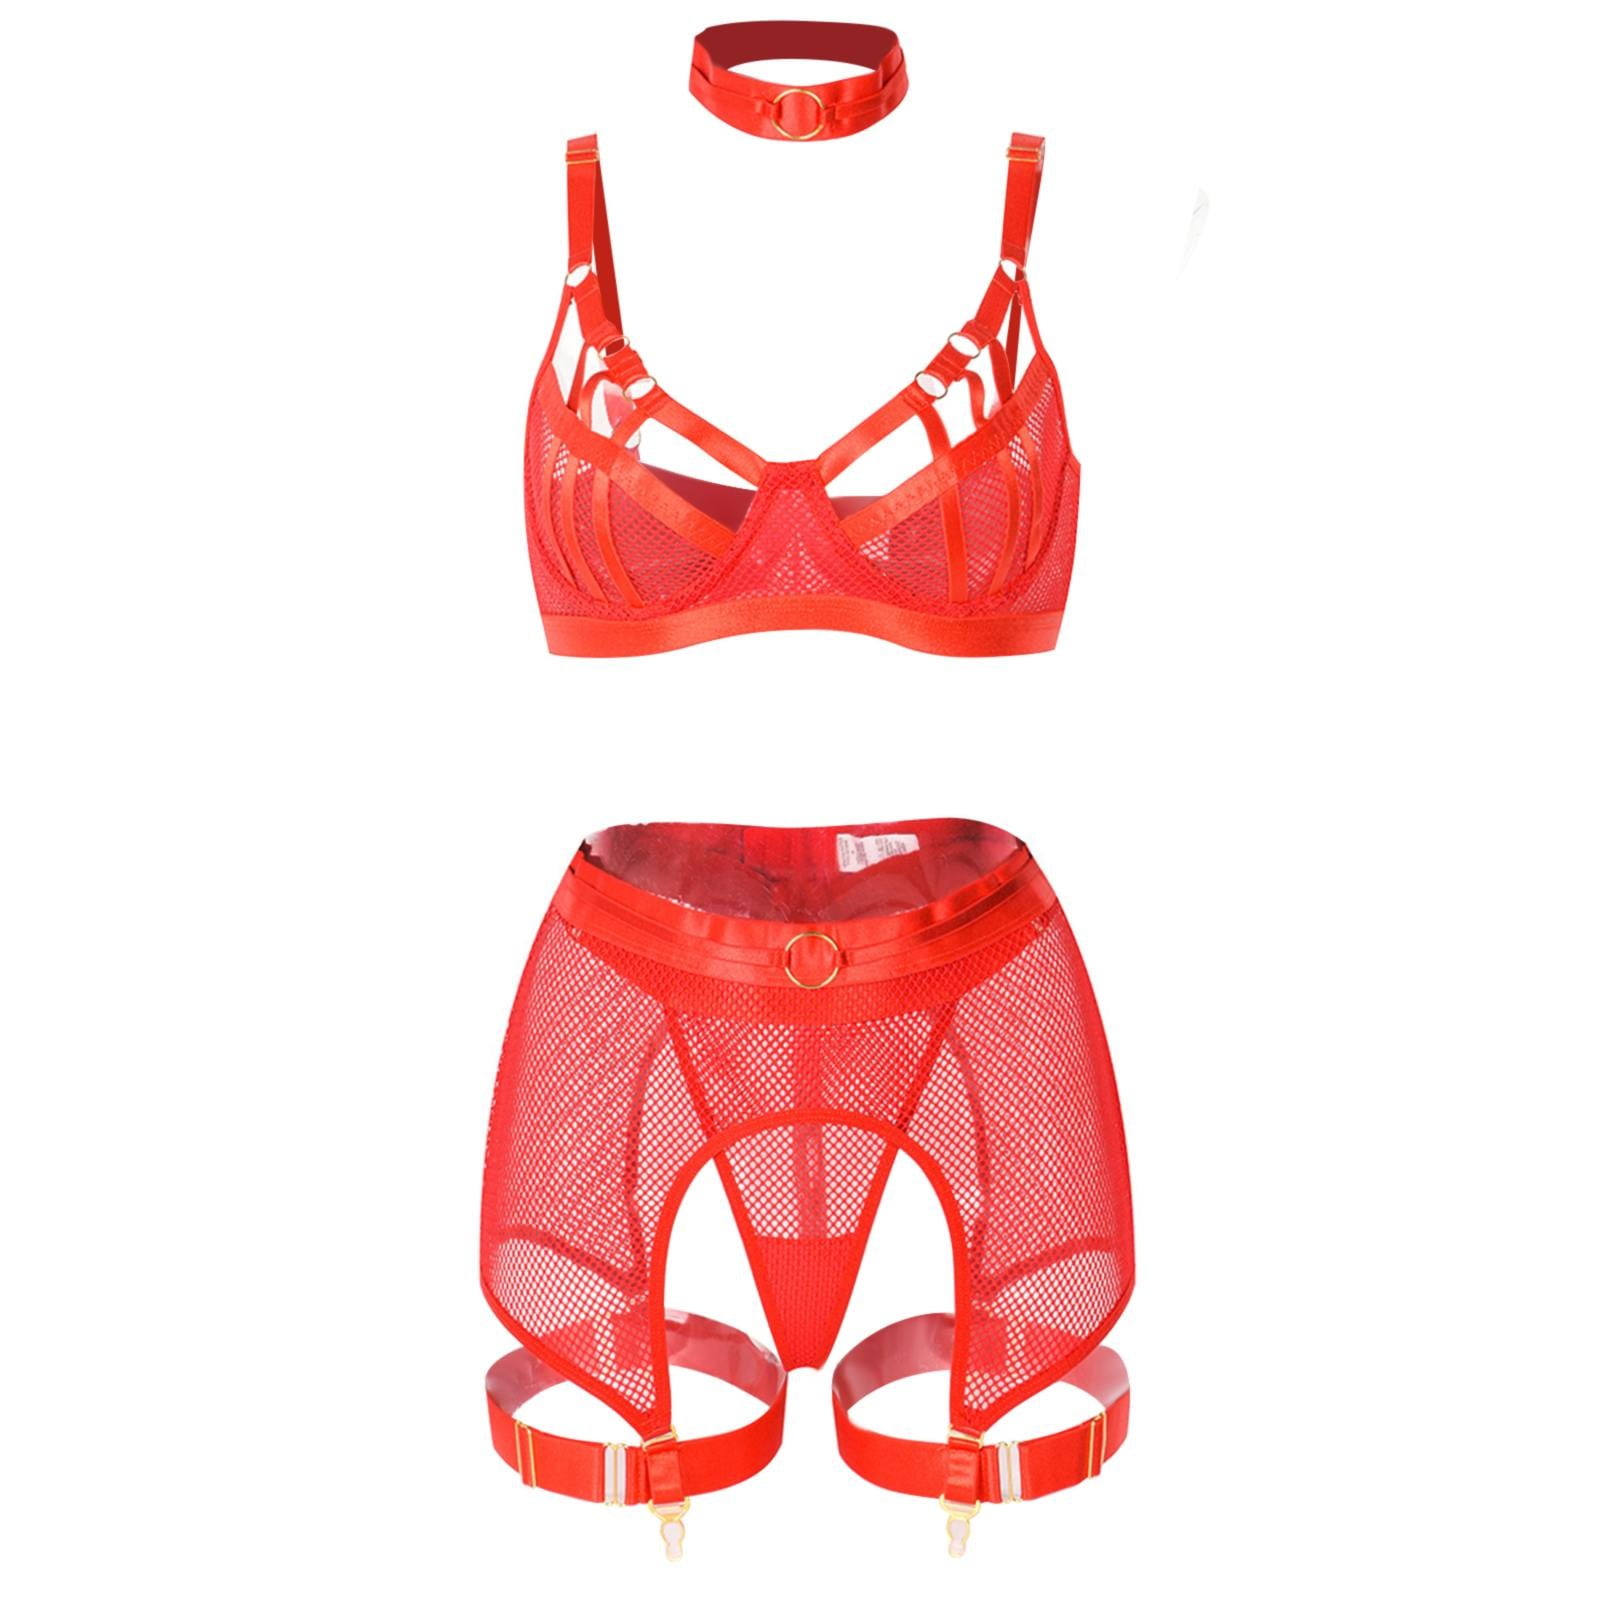 Aayomet Plus Size Lingerie Women Lingerie Hot Lace Bra Set Red Teddy Briefs  Bandage Underwear Set Dress Push Up Bra,Red XXL